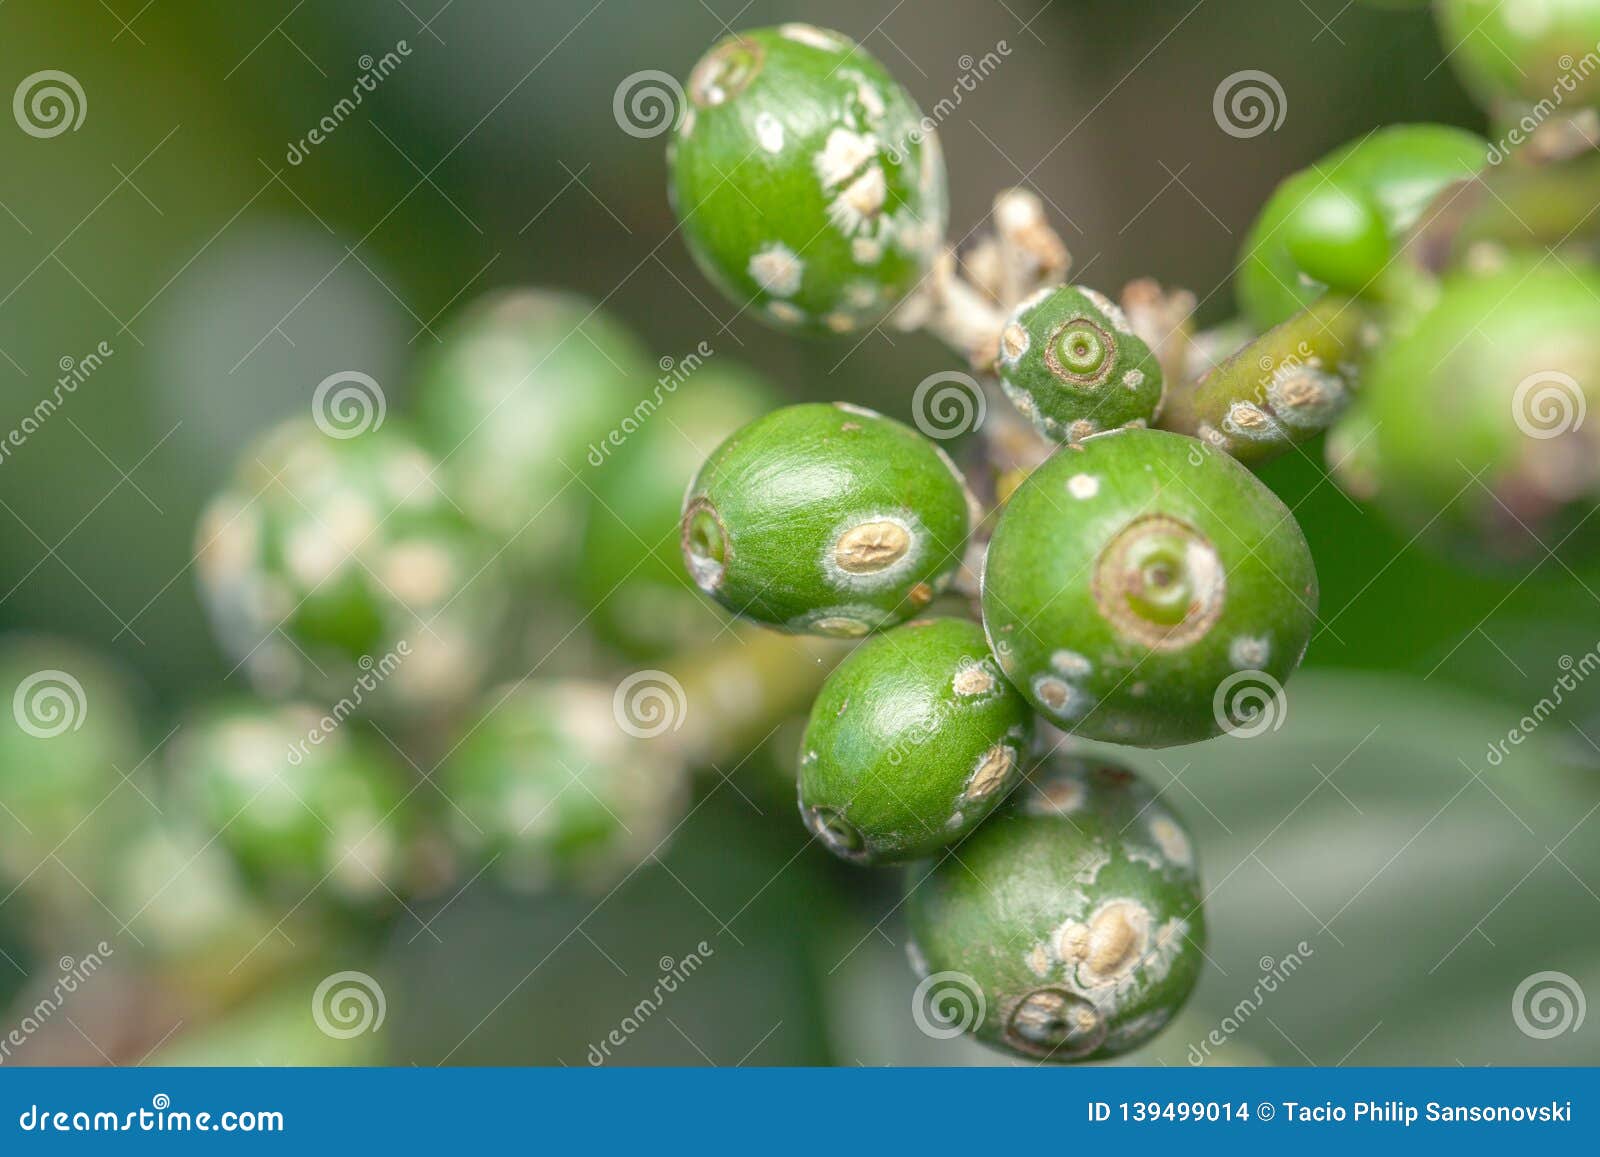 coffee bean green fruits closeup with cochineal plague - not mature - coffea arabica